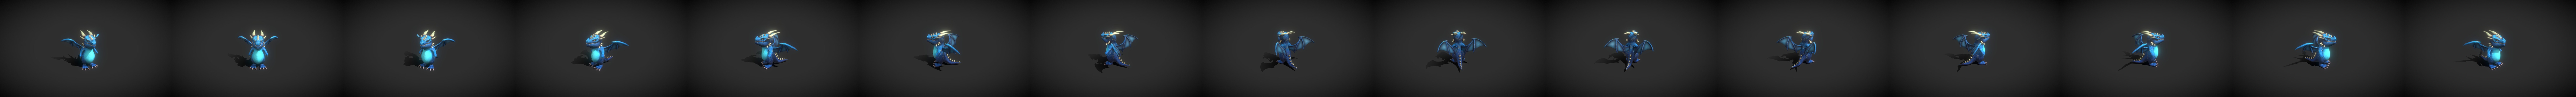 Blue Dragon 3D Model High Poly by model789